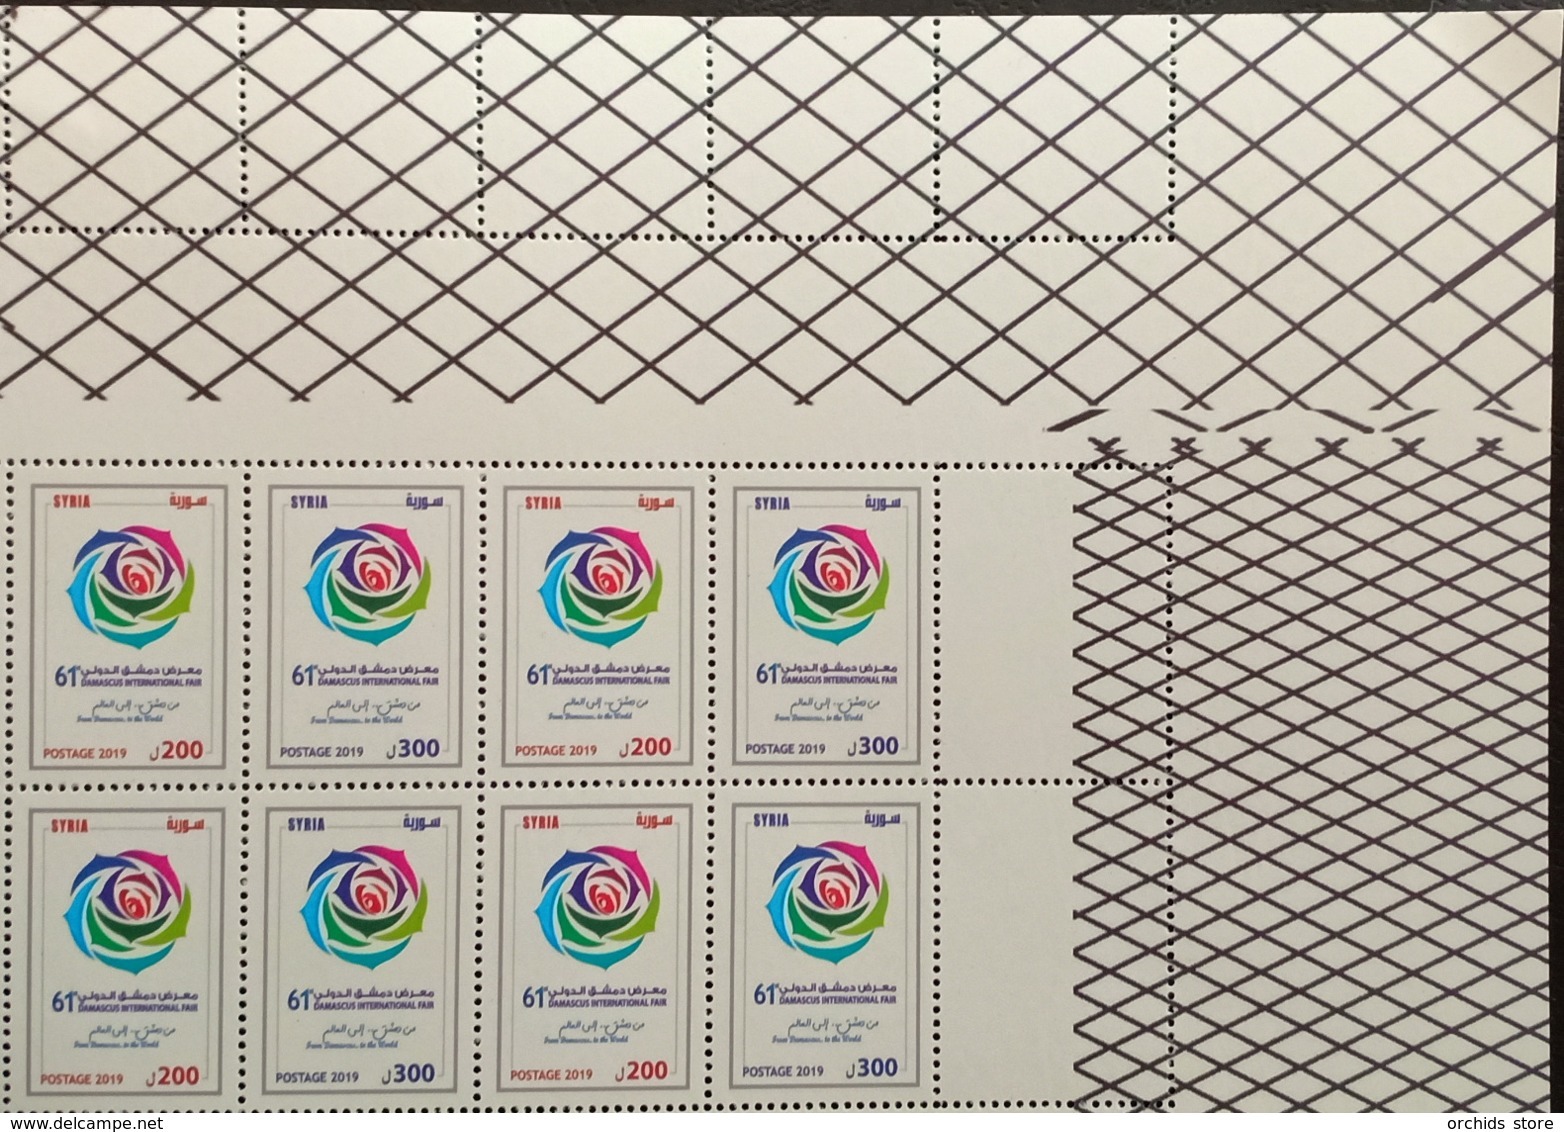 Syria 2019 NEW MNH Stamps - 61st Damascus International Fair, Flower - Corner Blk-4 - Syrië